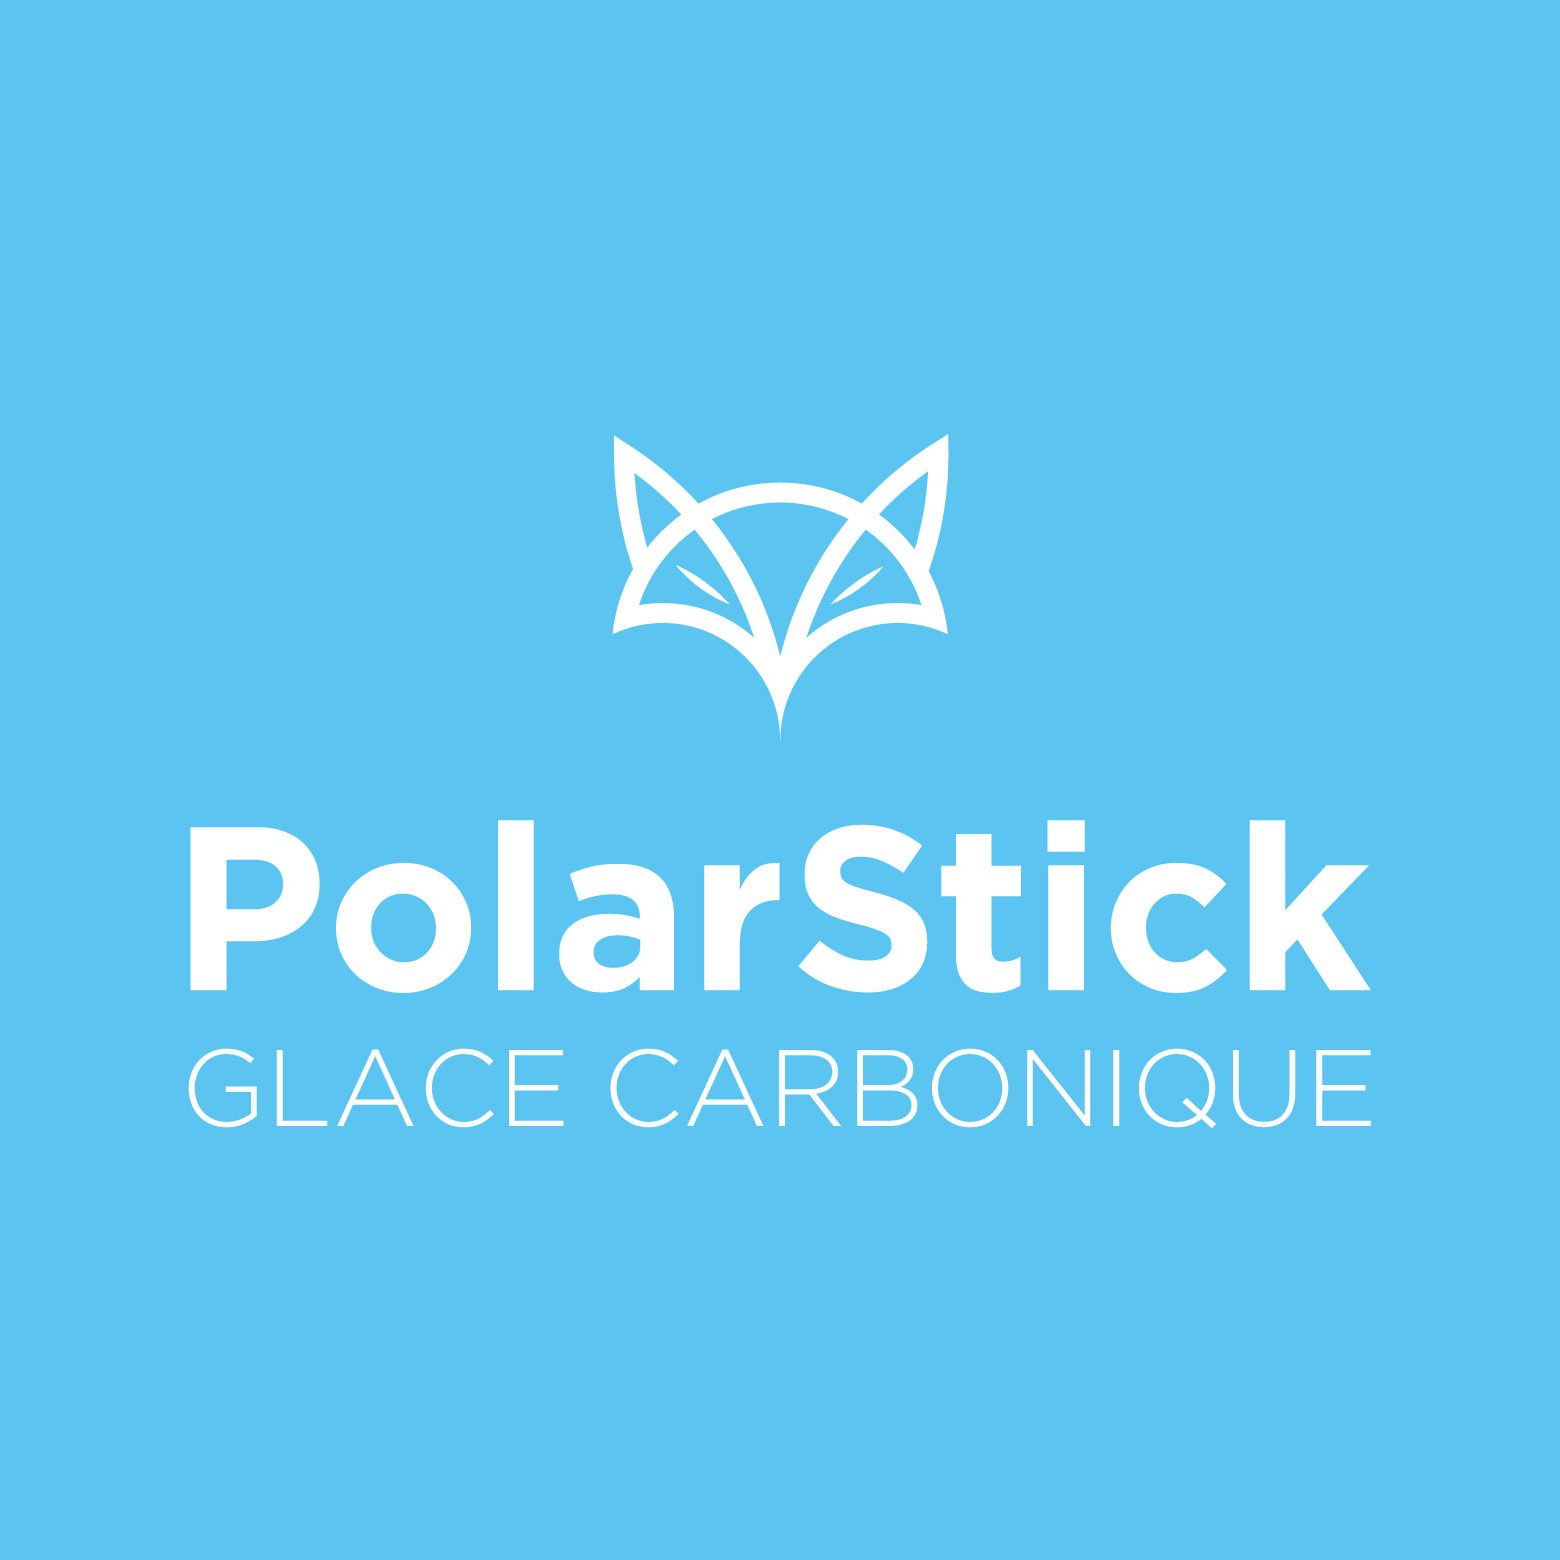 Polarstick Fabrication Distribution glace carbonique france